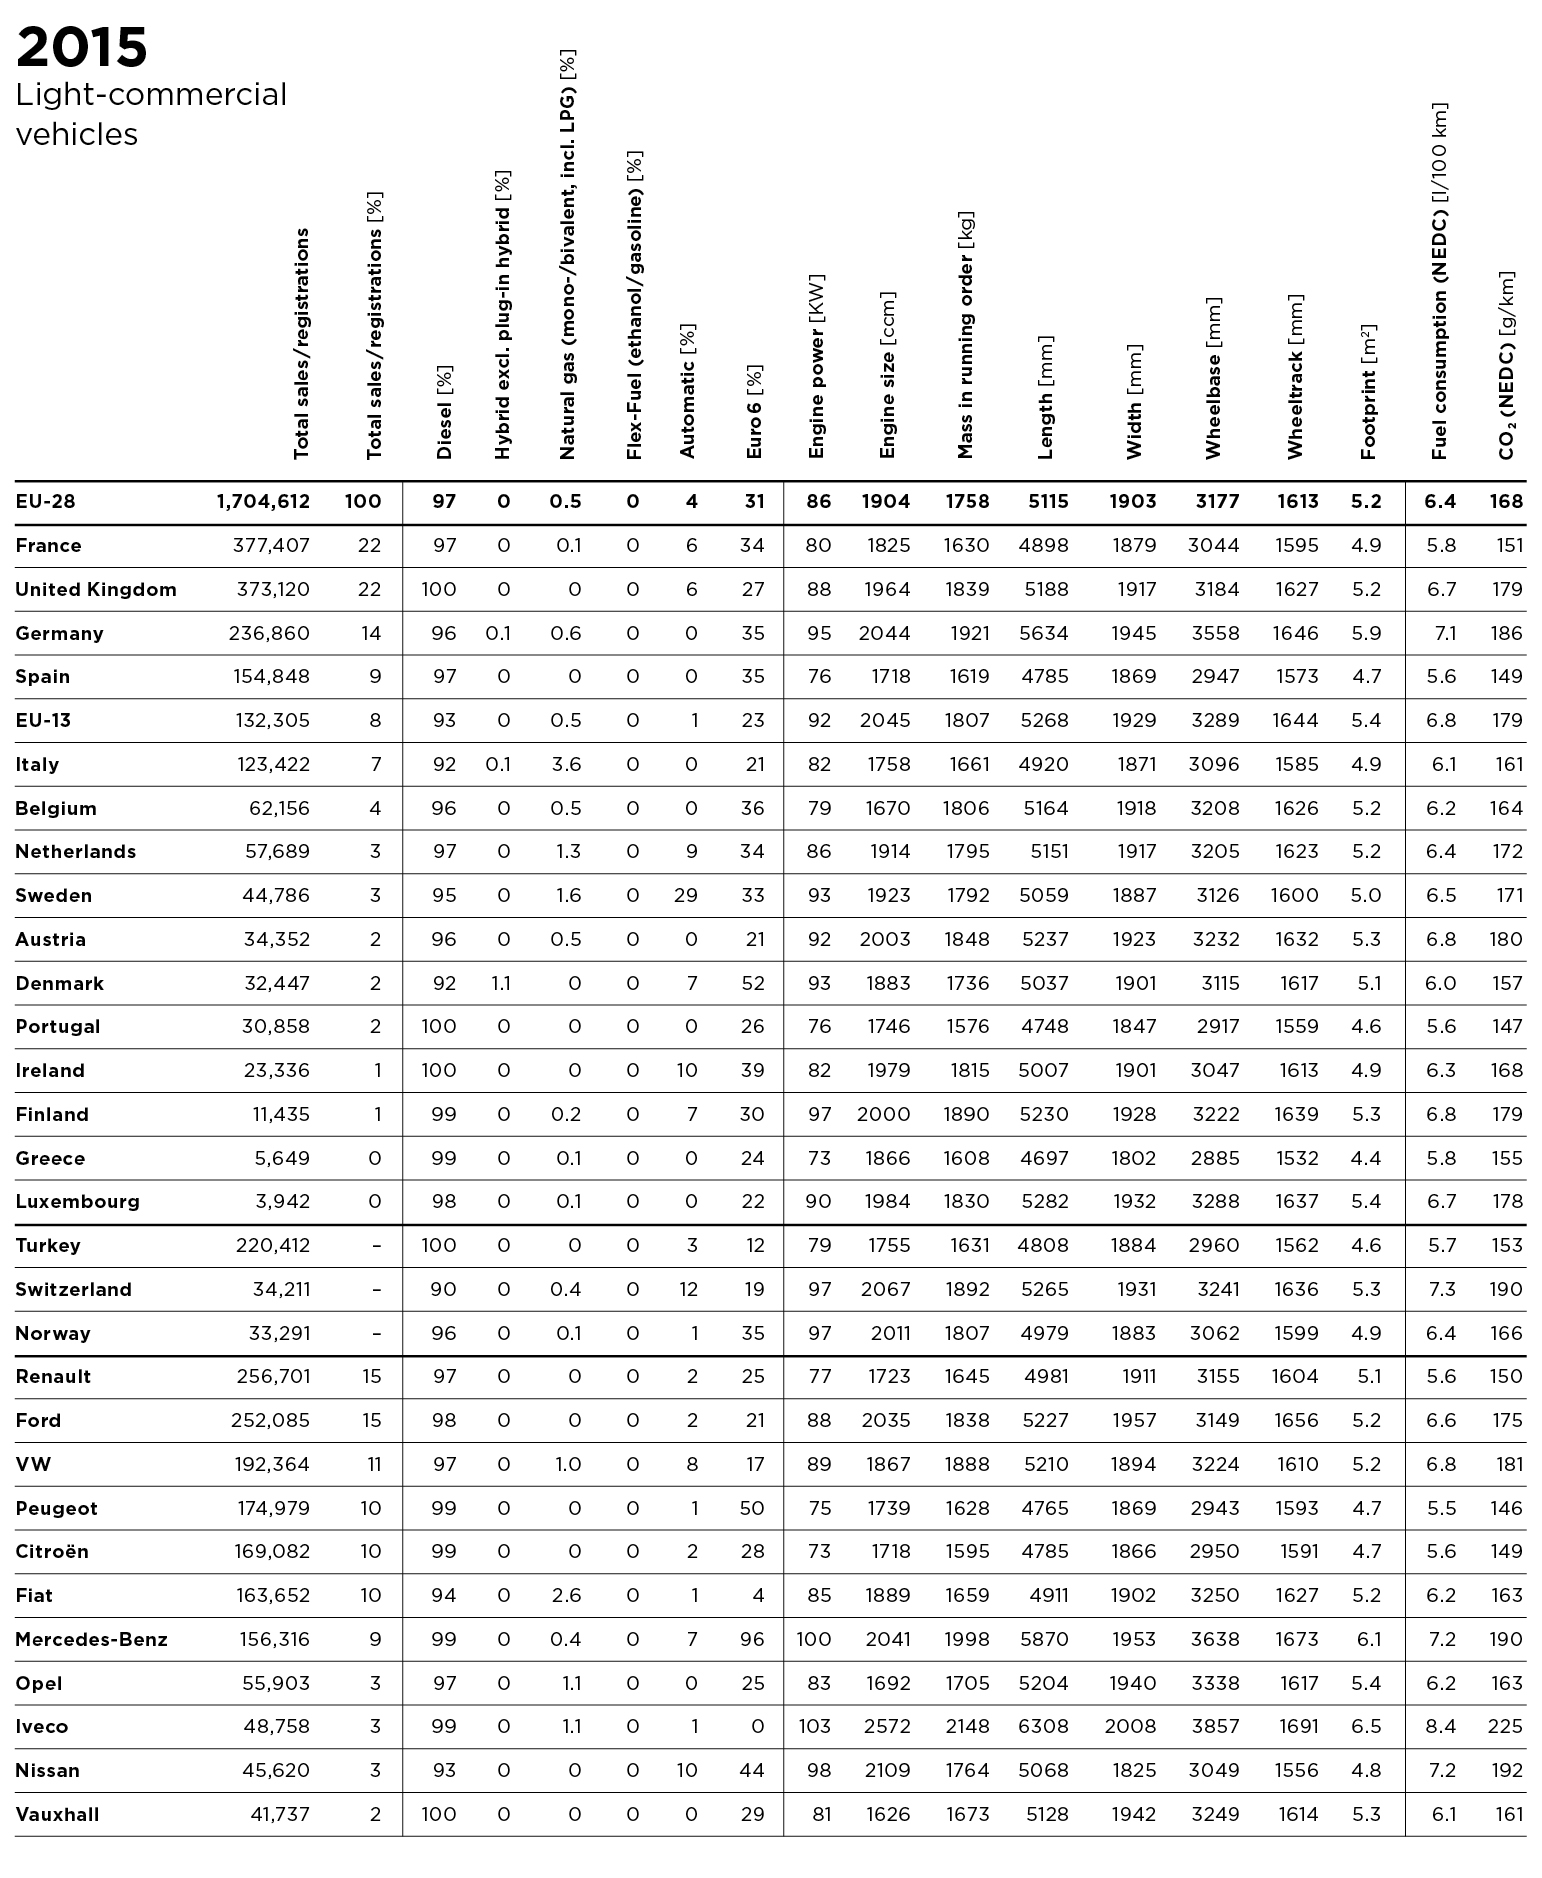 LCV 2015 data